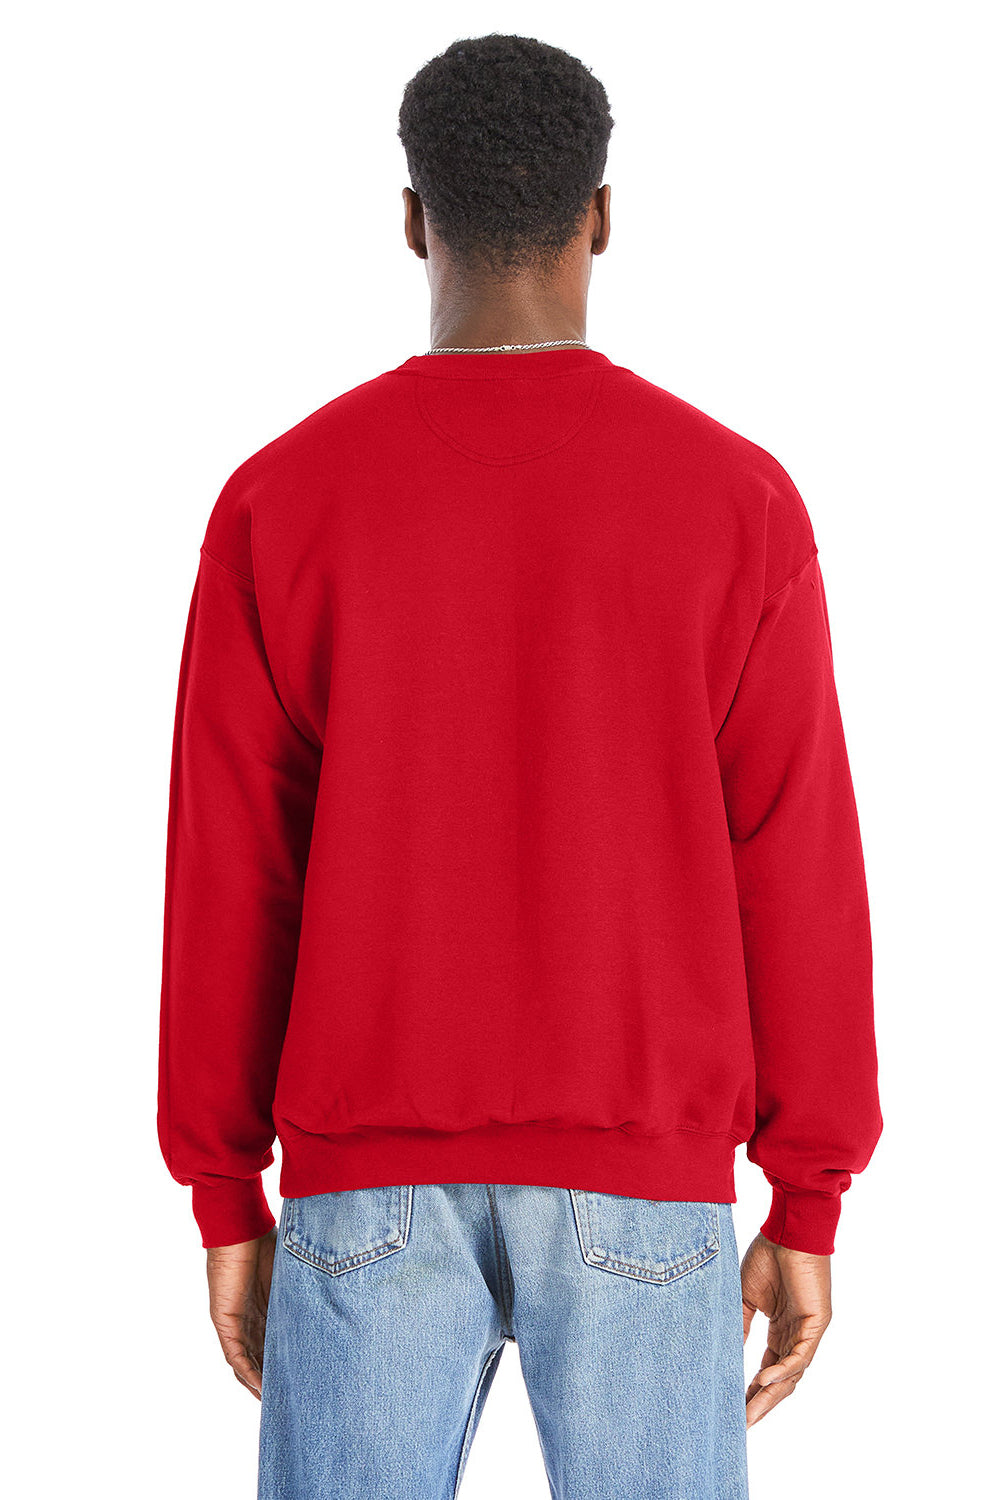 Hanes RS160 Mens Perfect Sweats Crewneck Sweatshirt Athletic Red Back